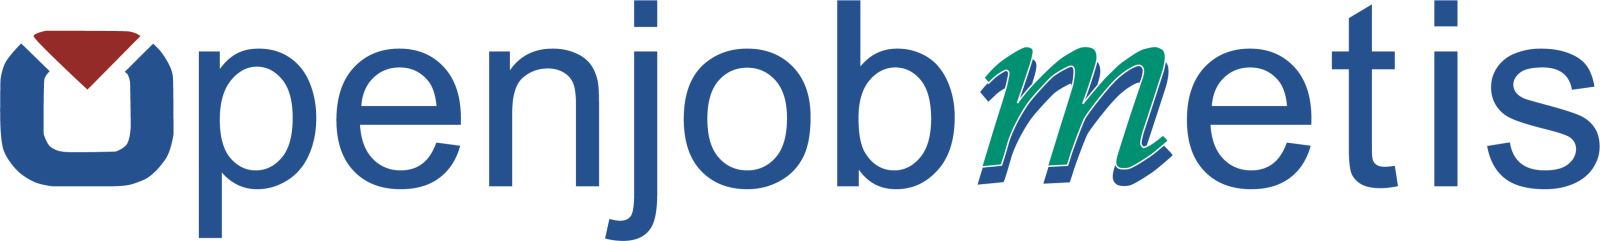 Logo Openjobmetis SpA